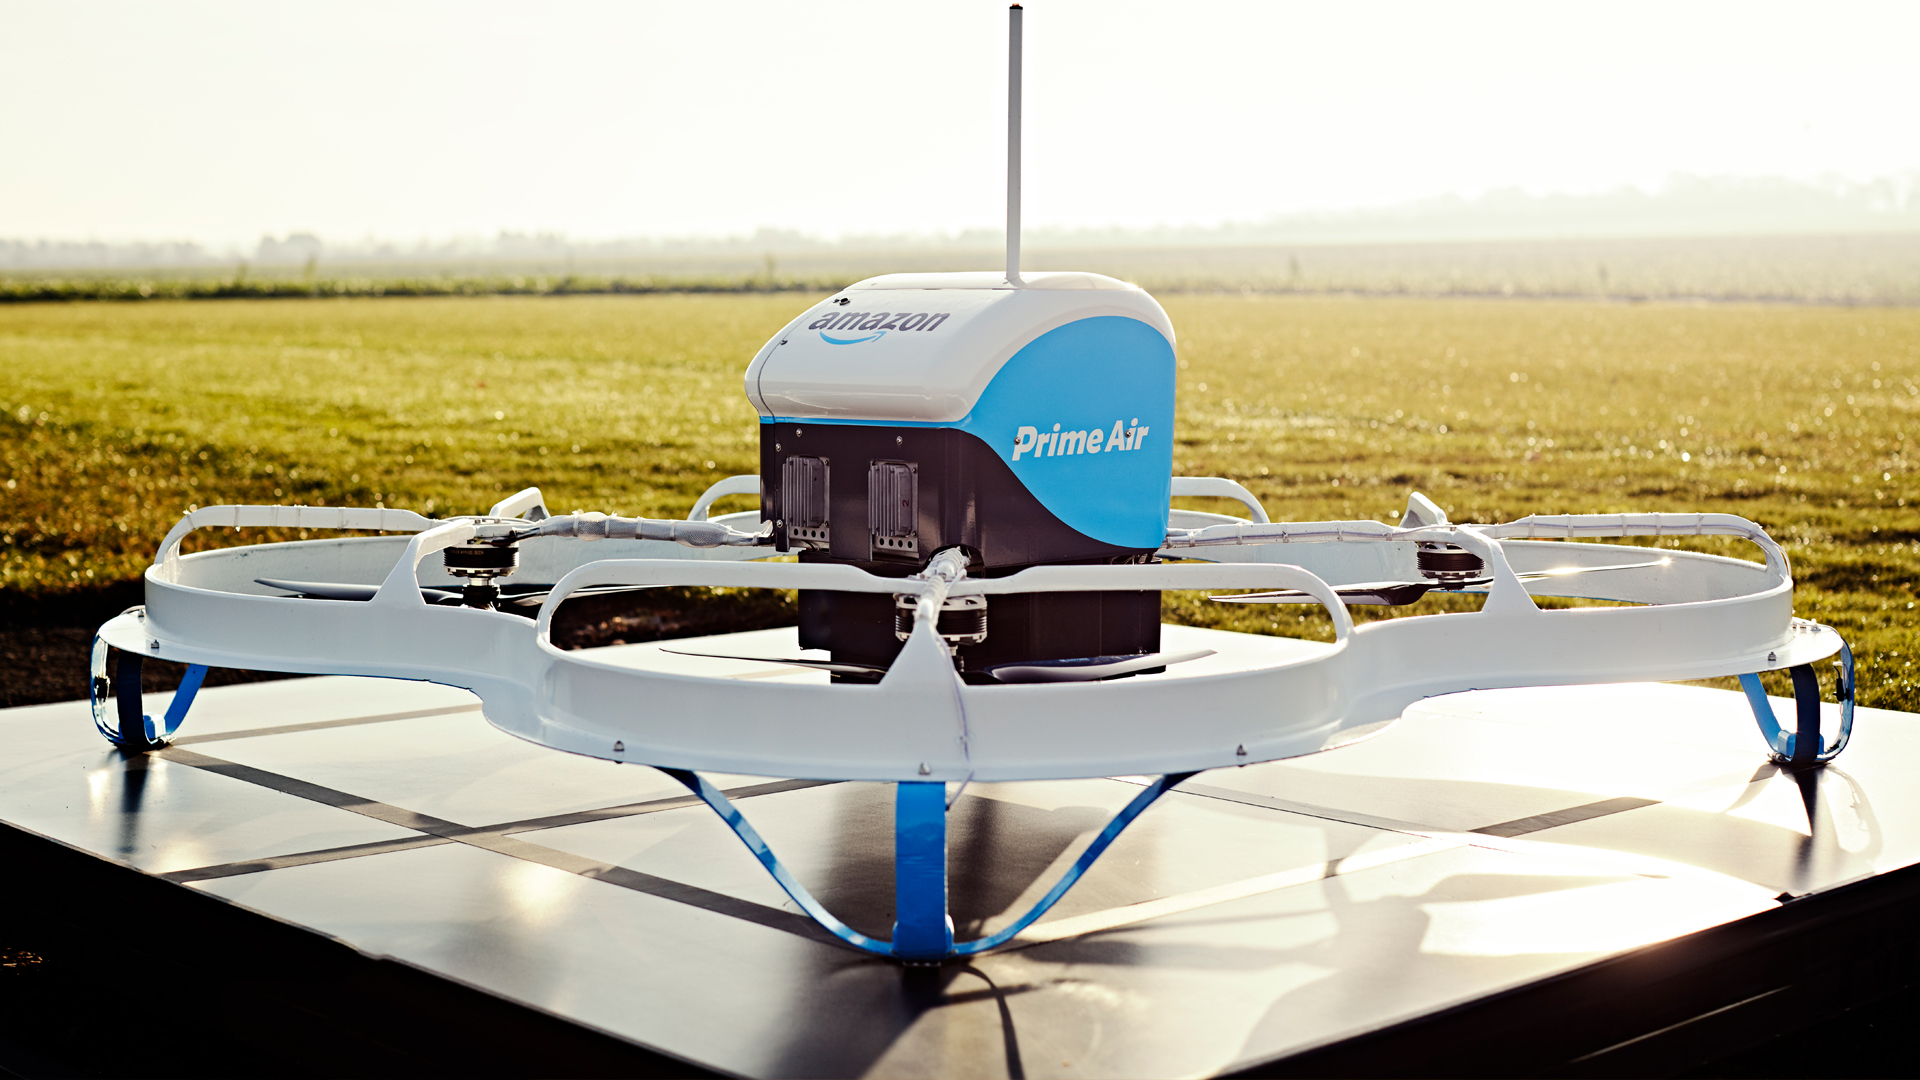 Amazon Drone in a Field